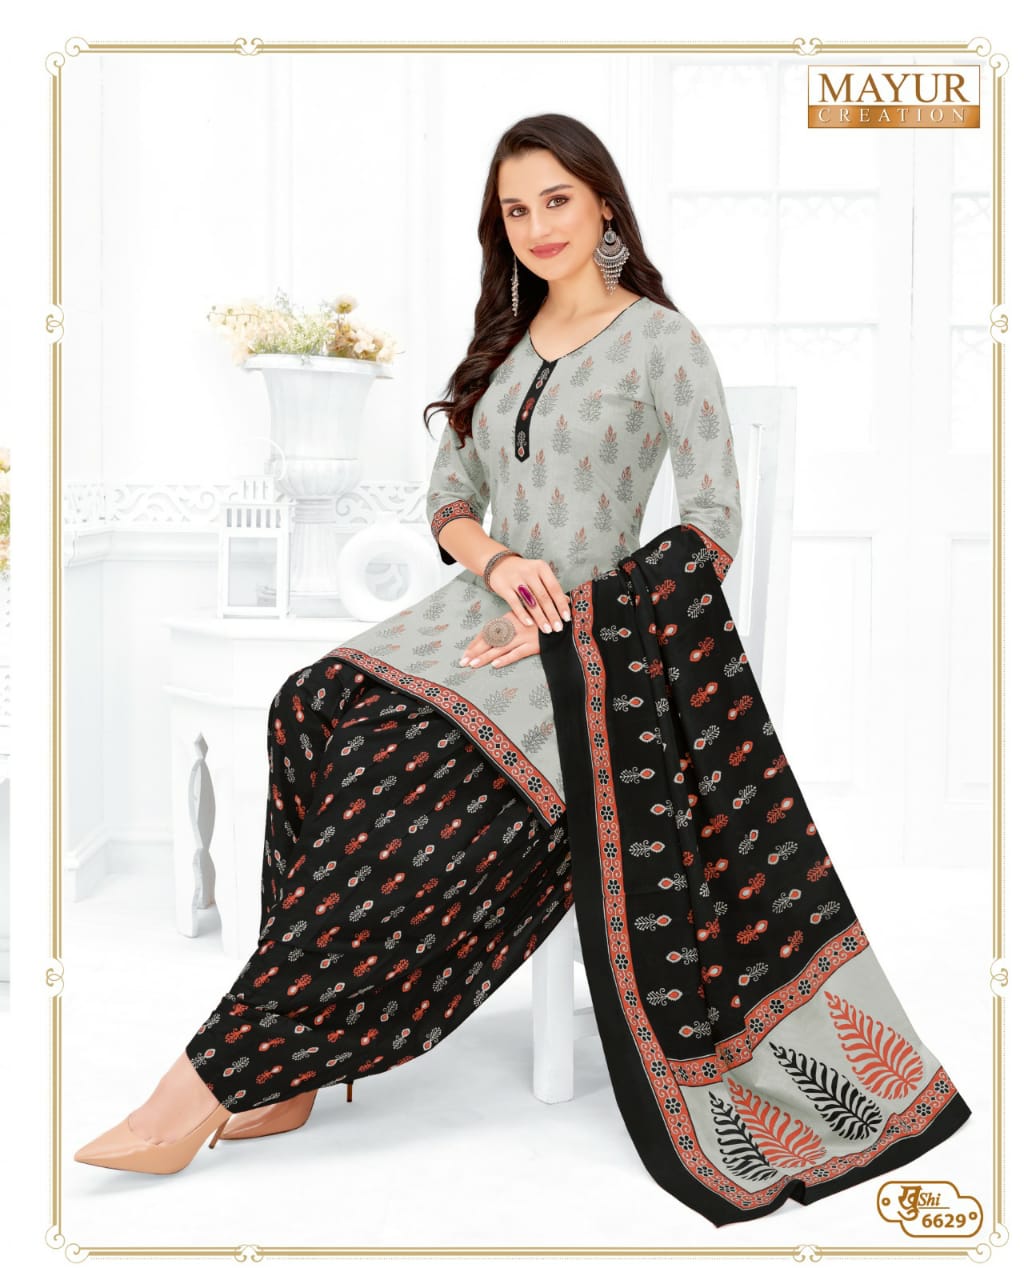 Khushi Vol 66 Mayur Creation Cotton Dress Material Manufacturer Wholesaler